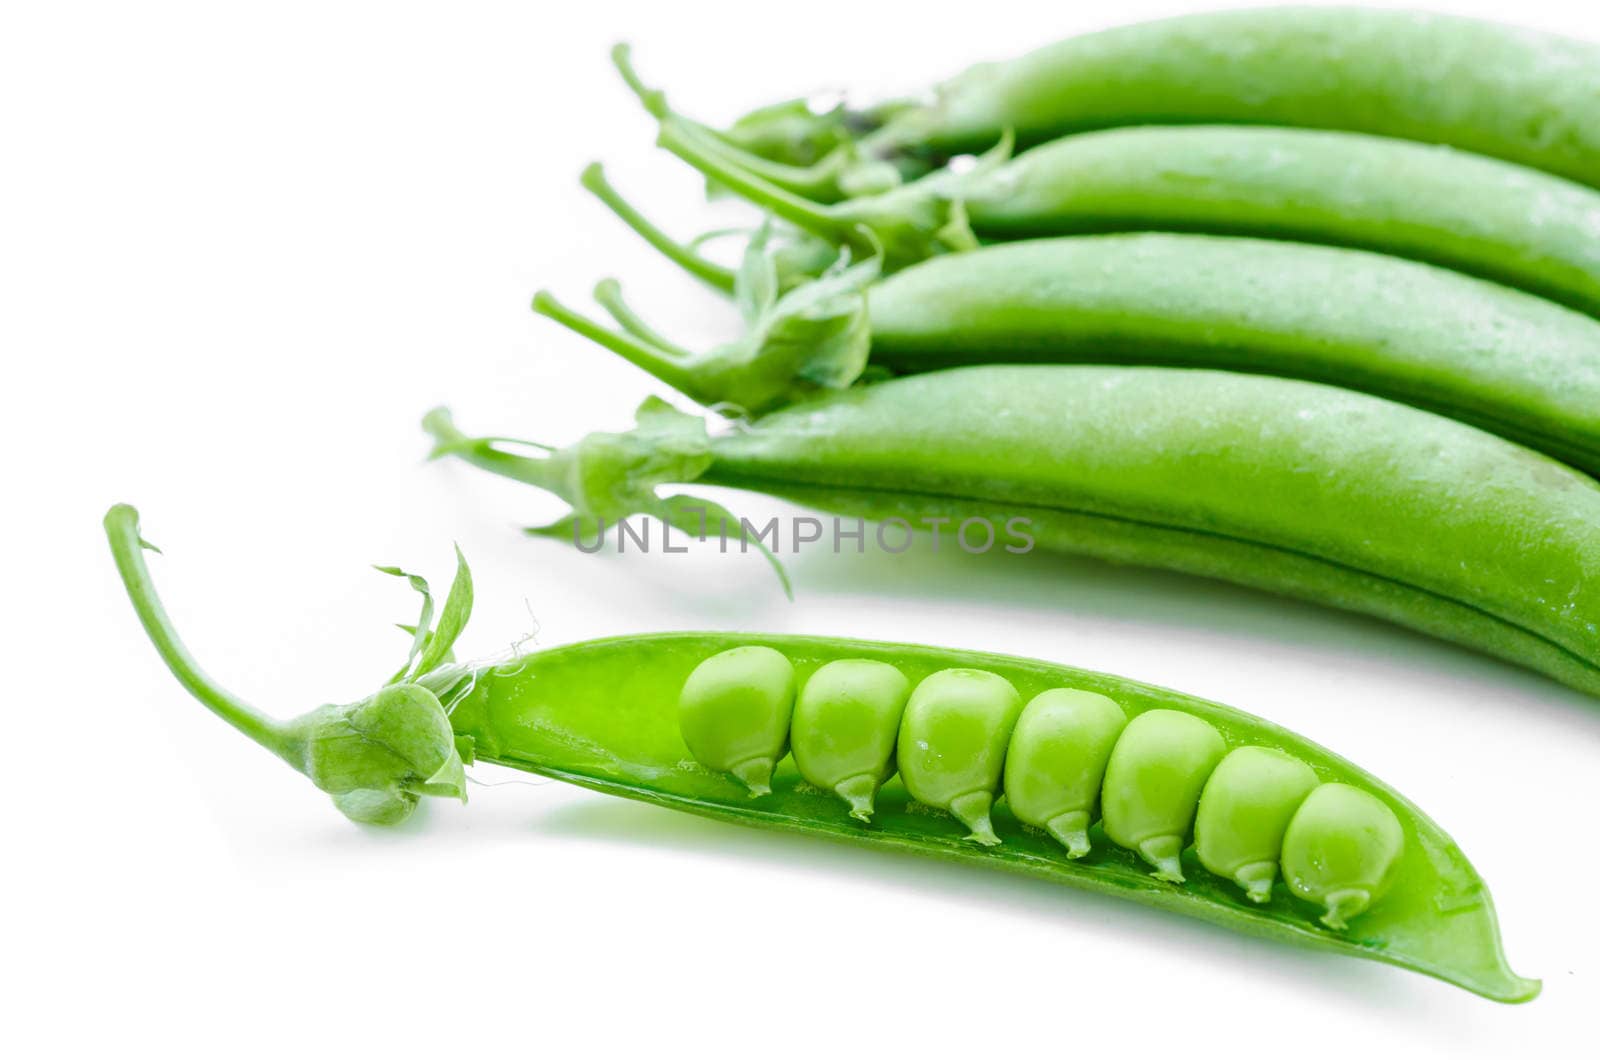 sugar snaps peas on a white background.